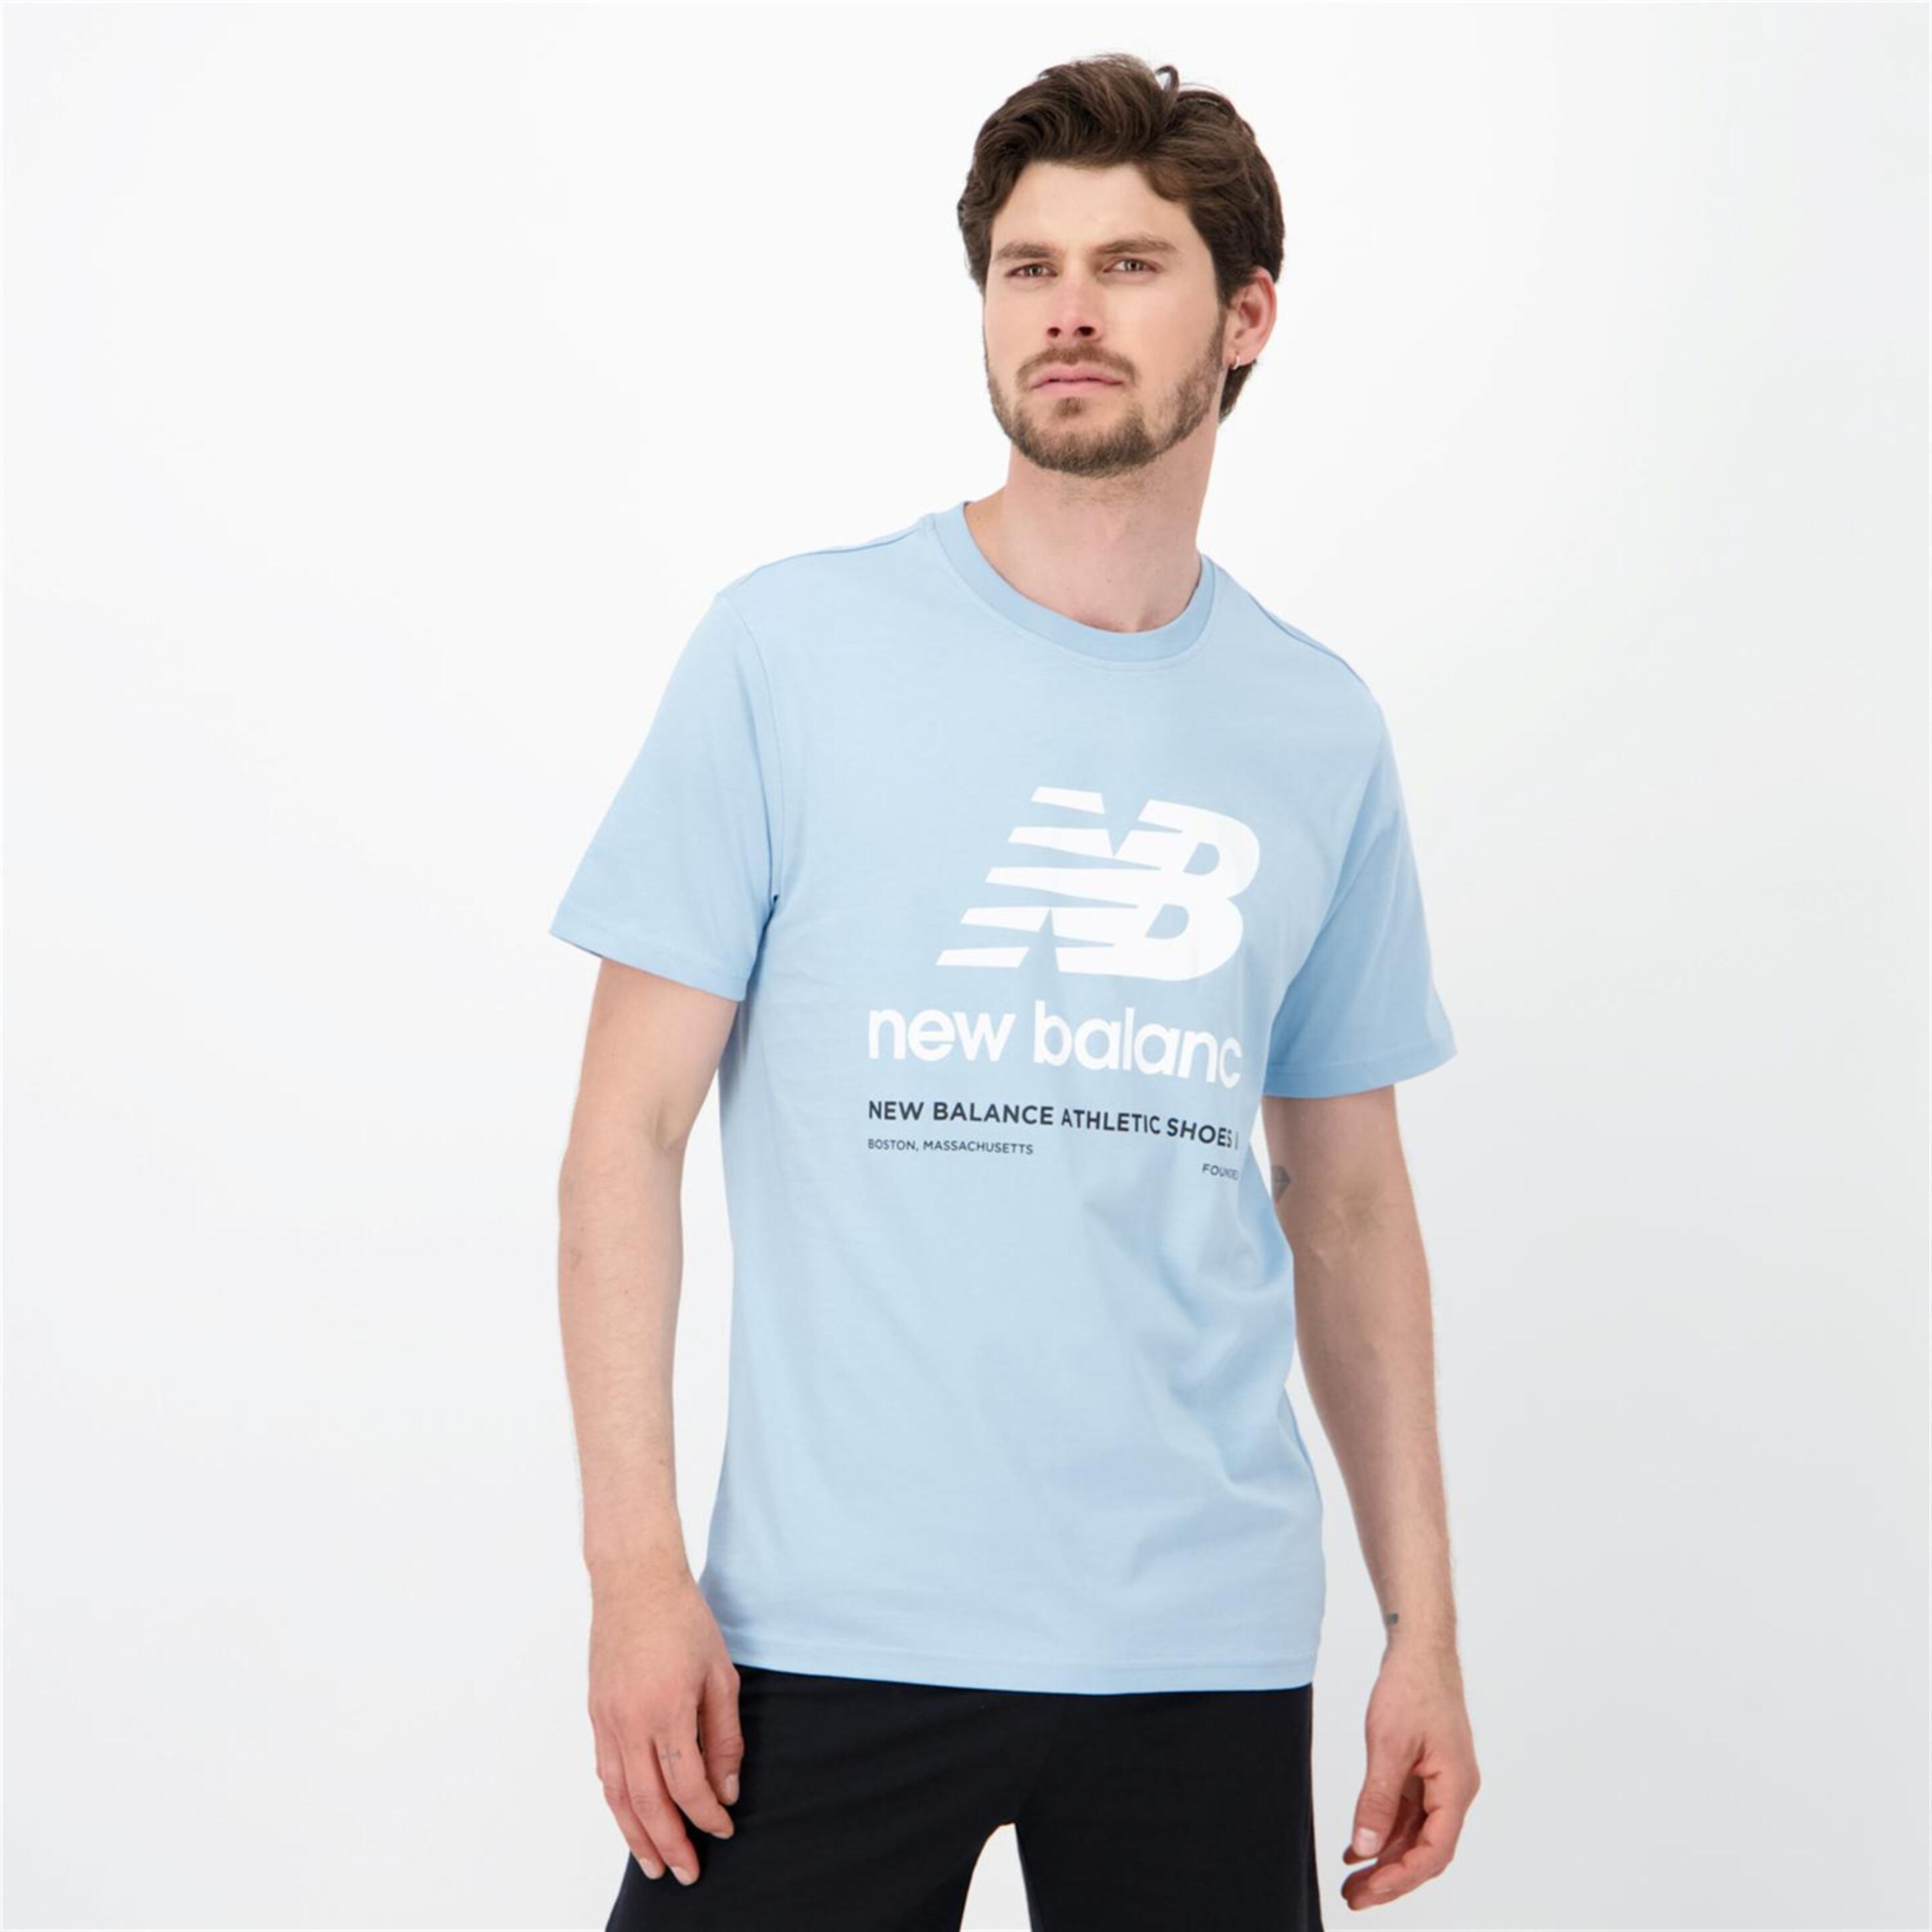 New Balance Athletic - azul - Camiseta Hombre